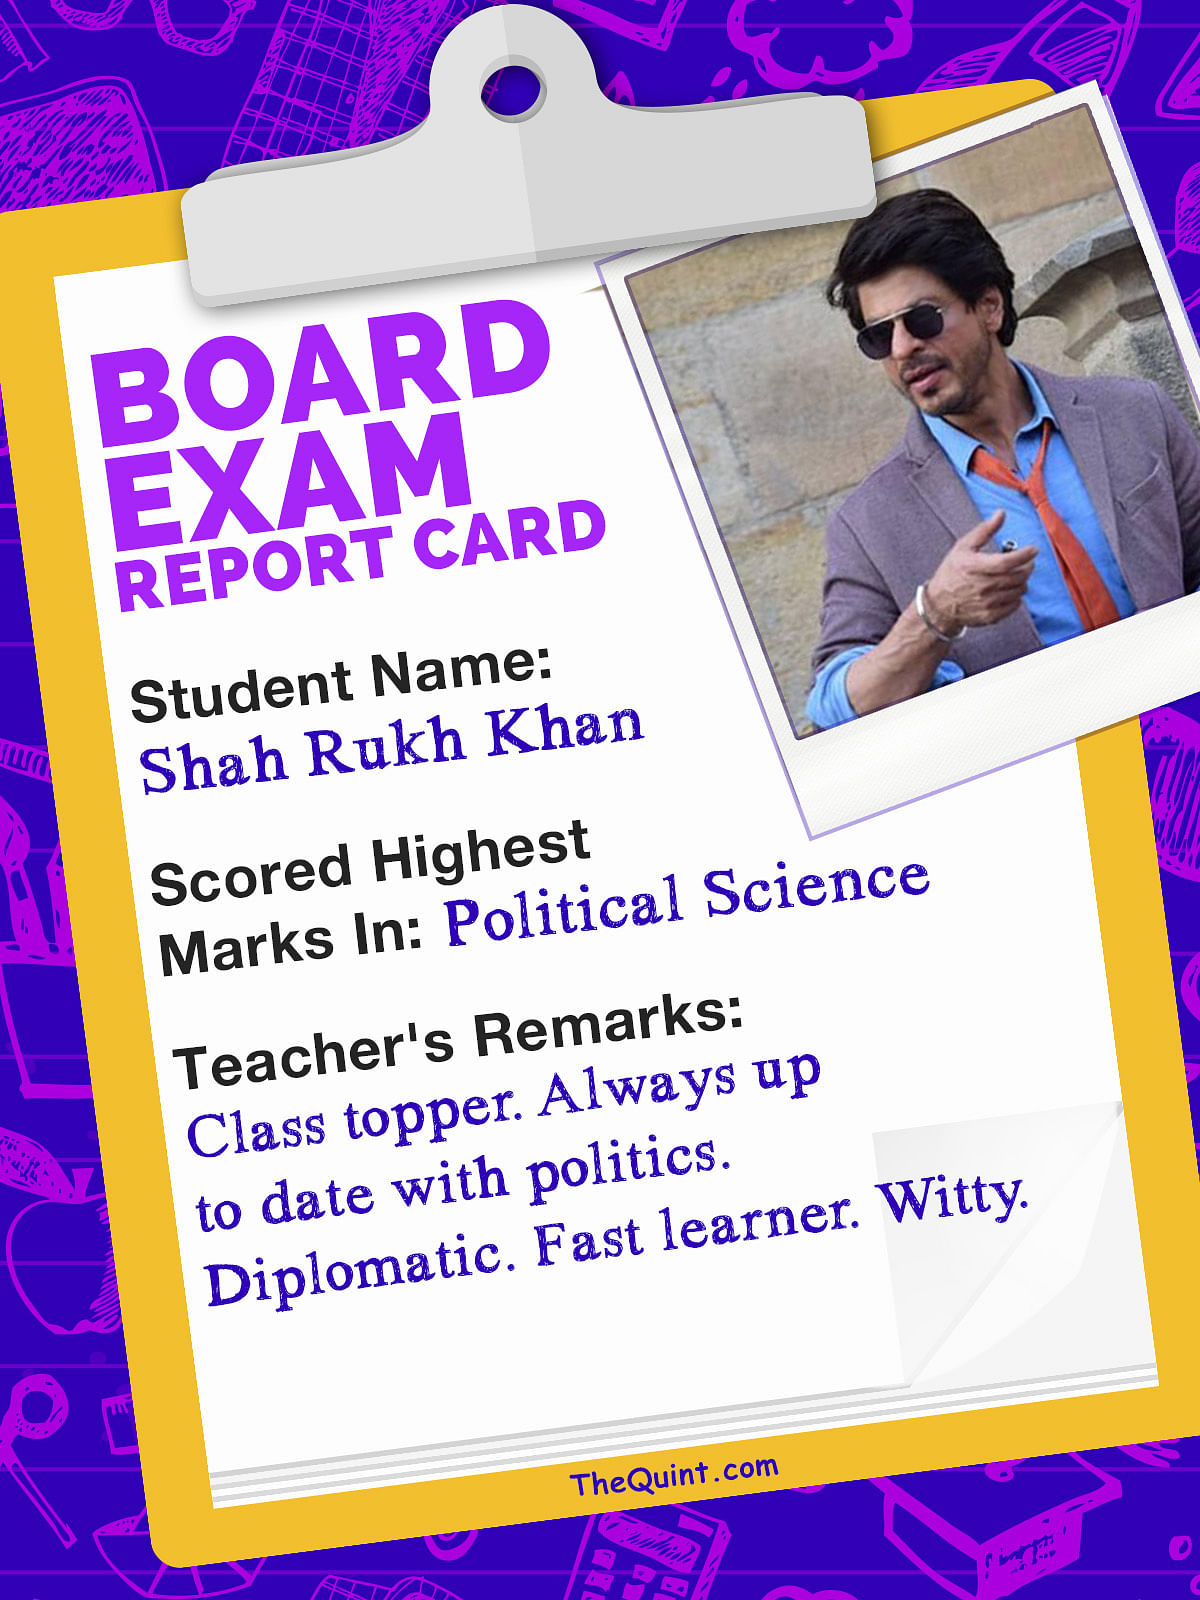 Yup! Salman Khan did give his boards.